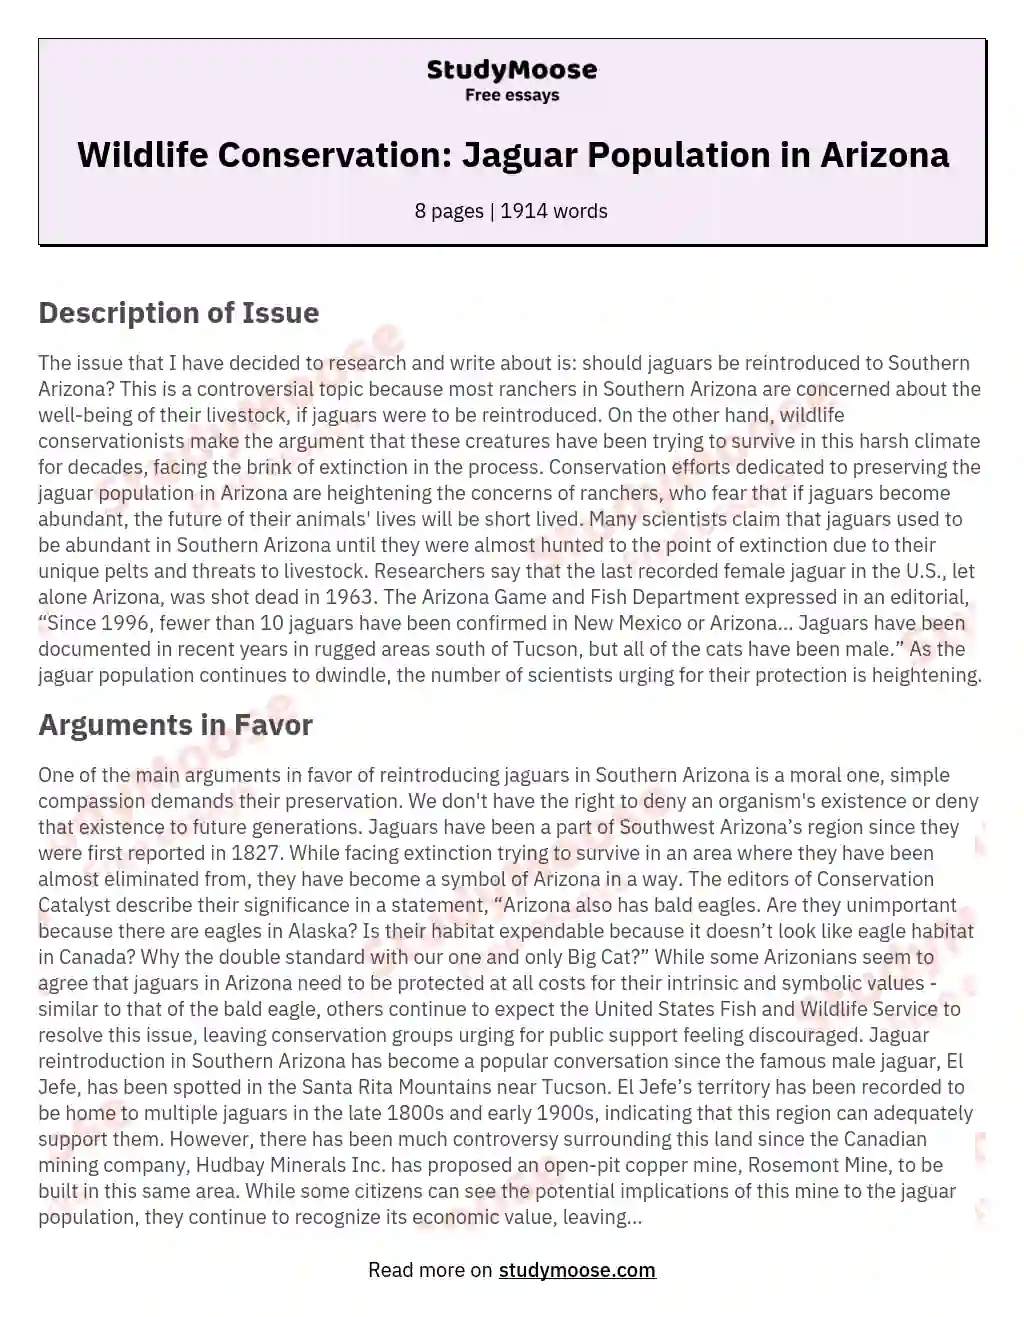 Wildlife Conservation: Jaguar Population in Arizona essay